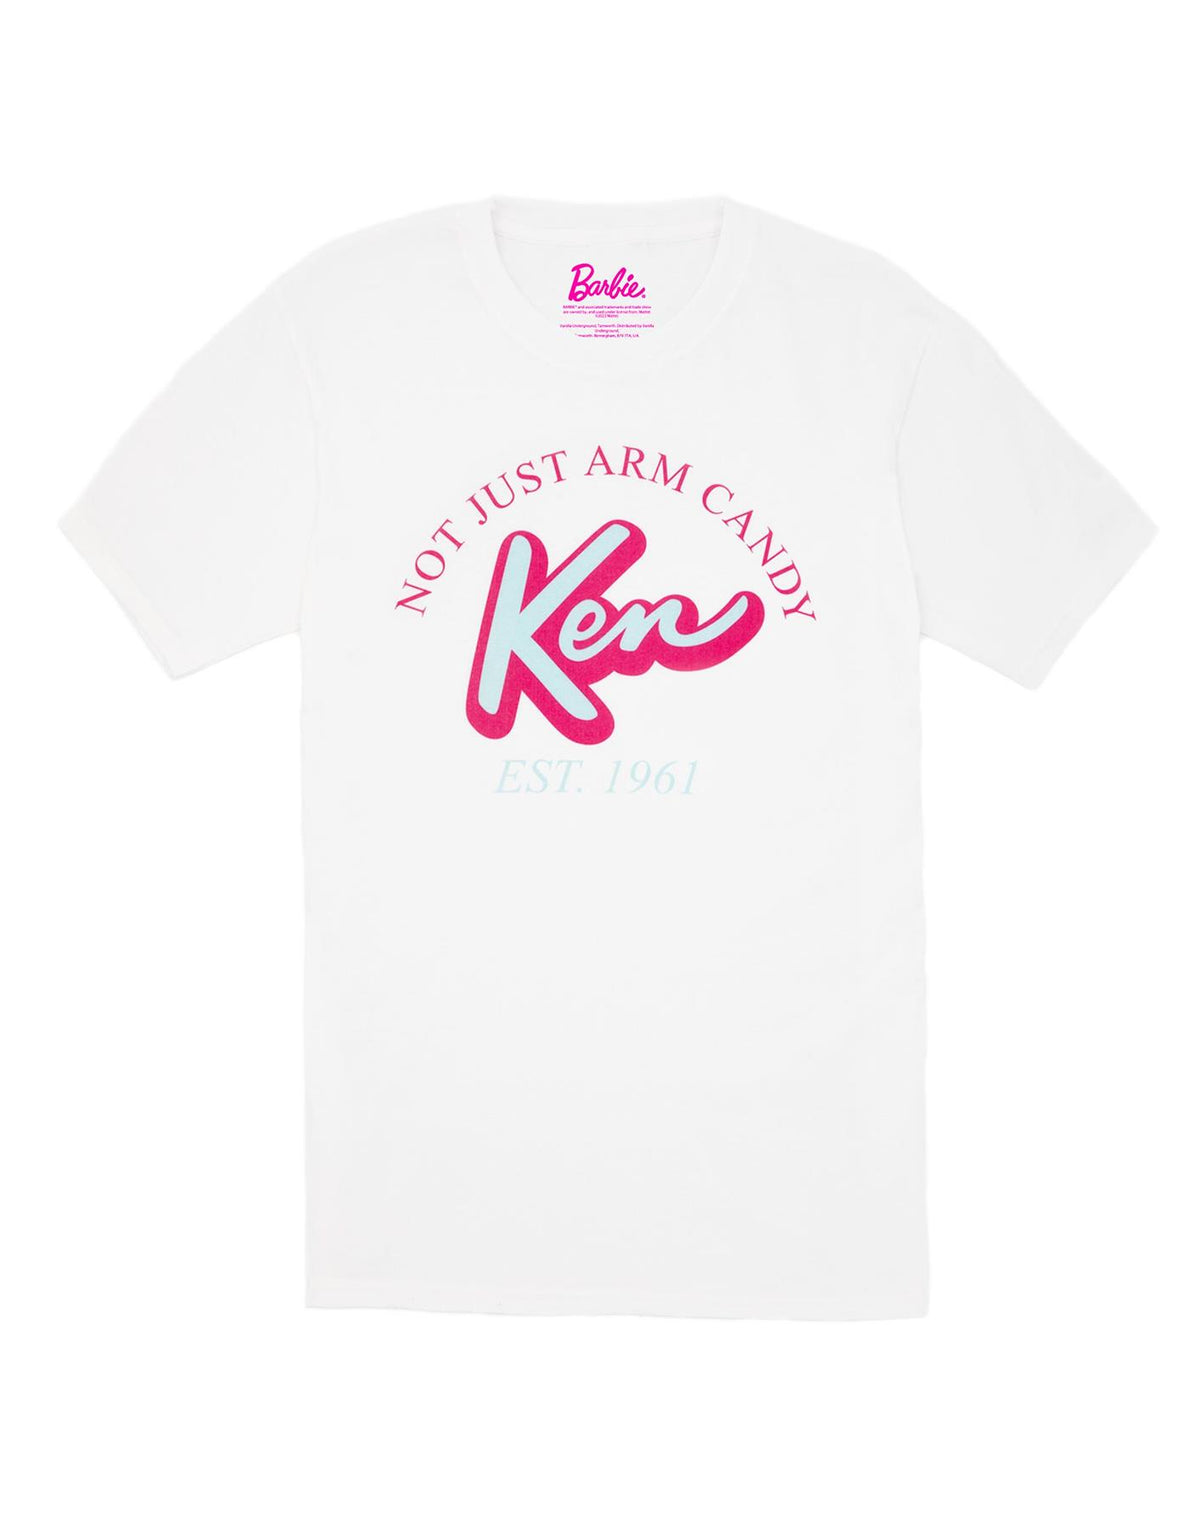  Barbie T-Shirt Mens | Mens’ Ken Tee Shirt | Ken Cotton Tshirts  for Men | Official Merchandise : Clothing, Shoes & Jewelry